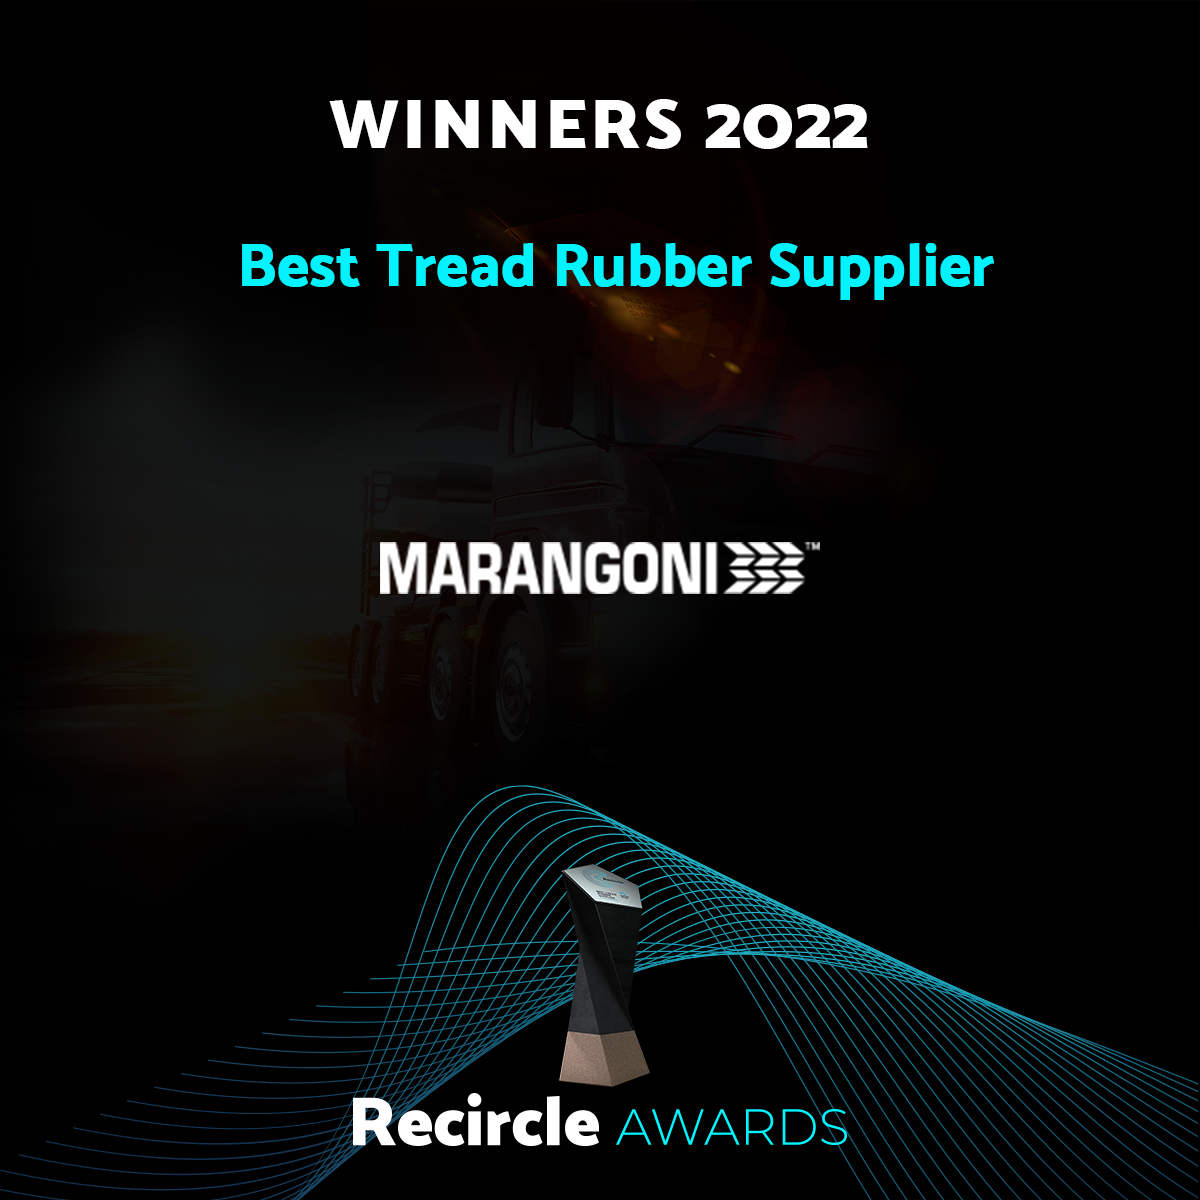 Best Tread Rubber Supplier 22